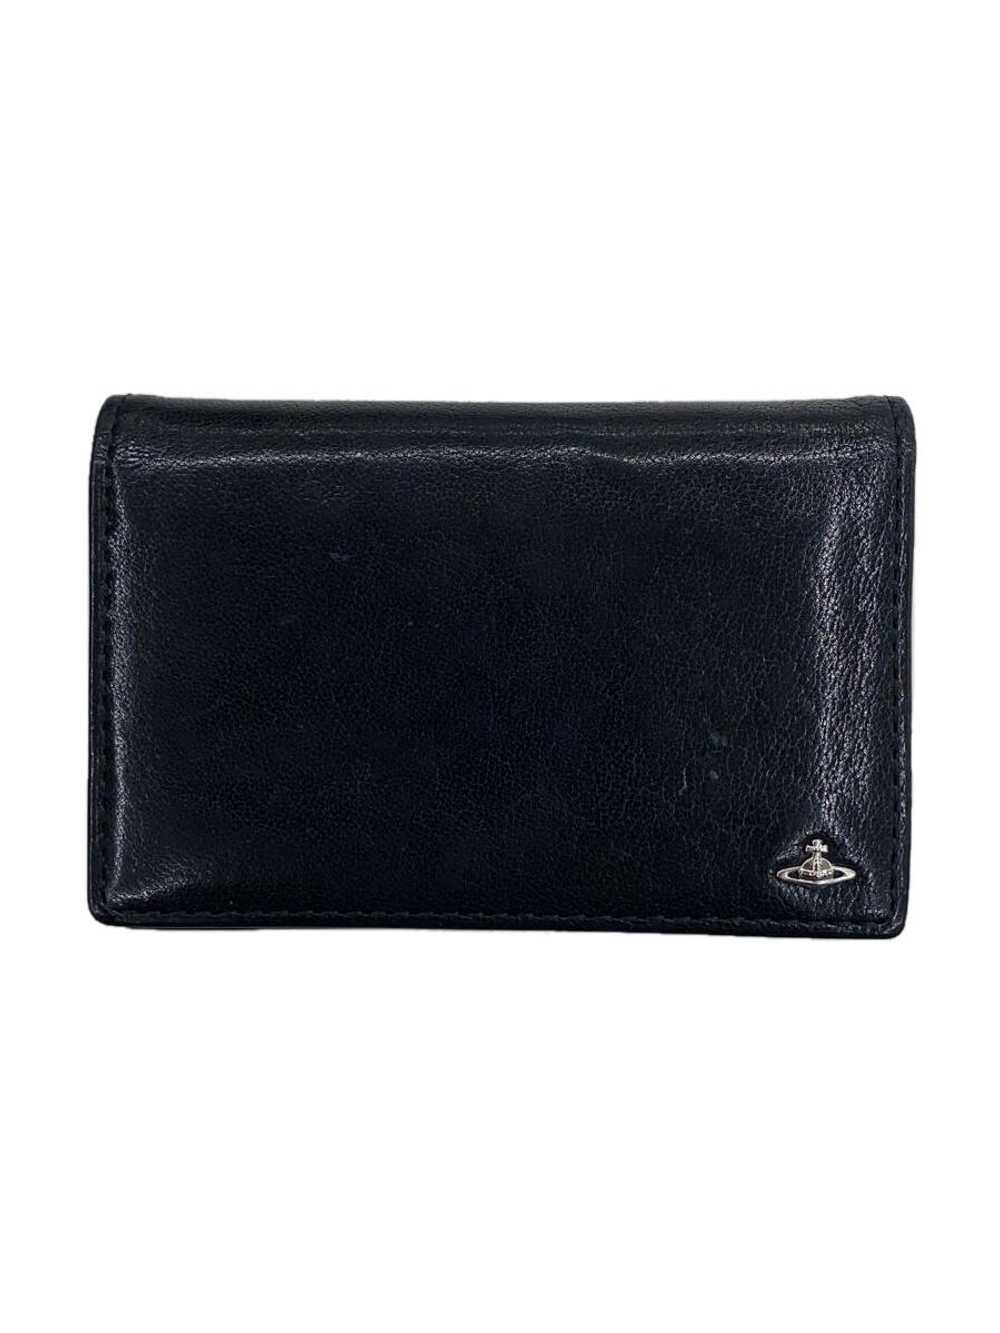 Vivienne Westwood Man Card Case Leather   Men - image 1